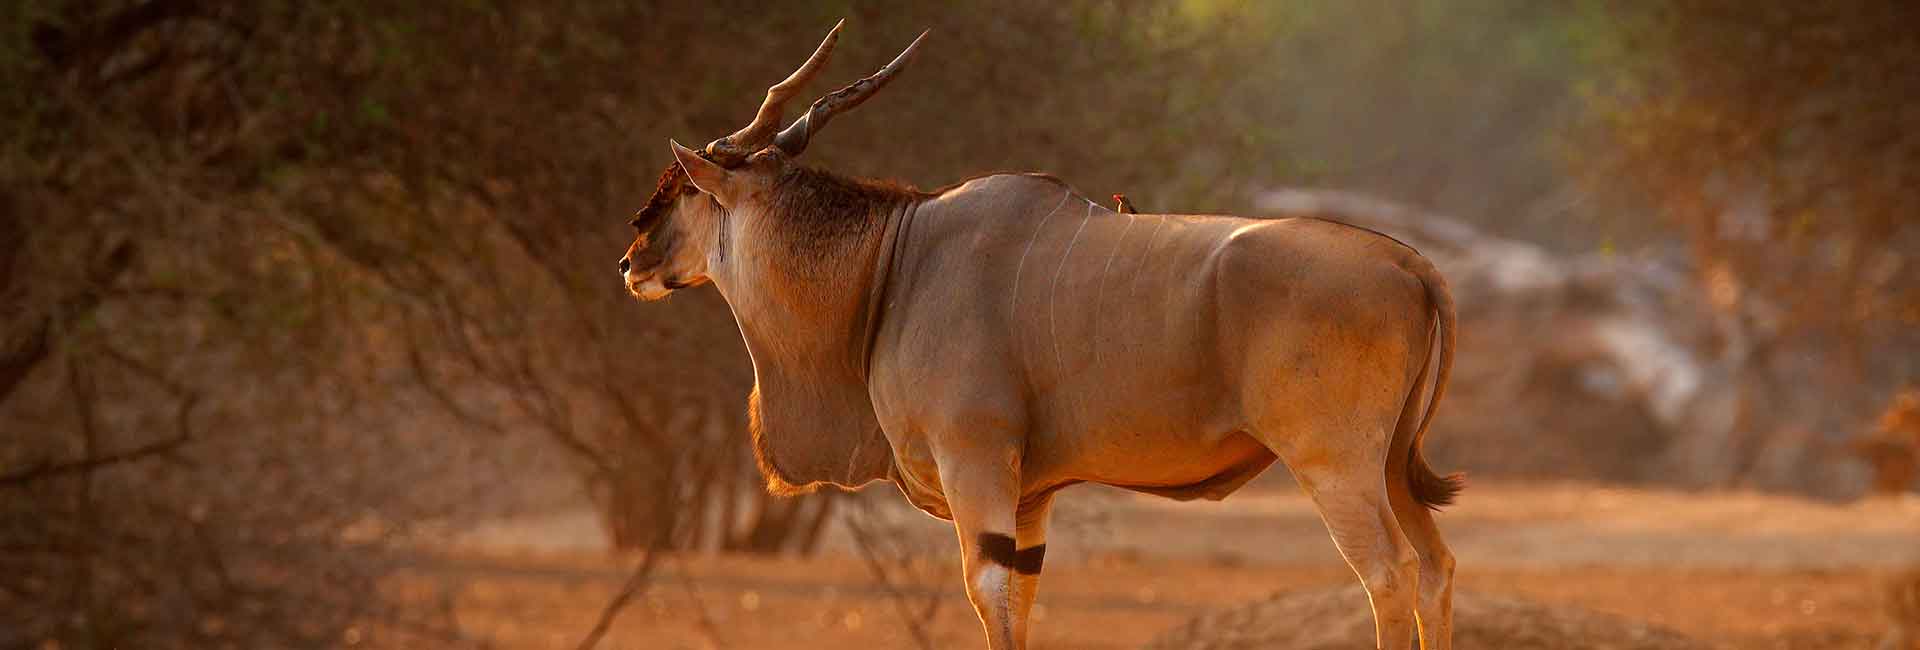 eland-hunting-somerby-safaris-banner